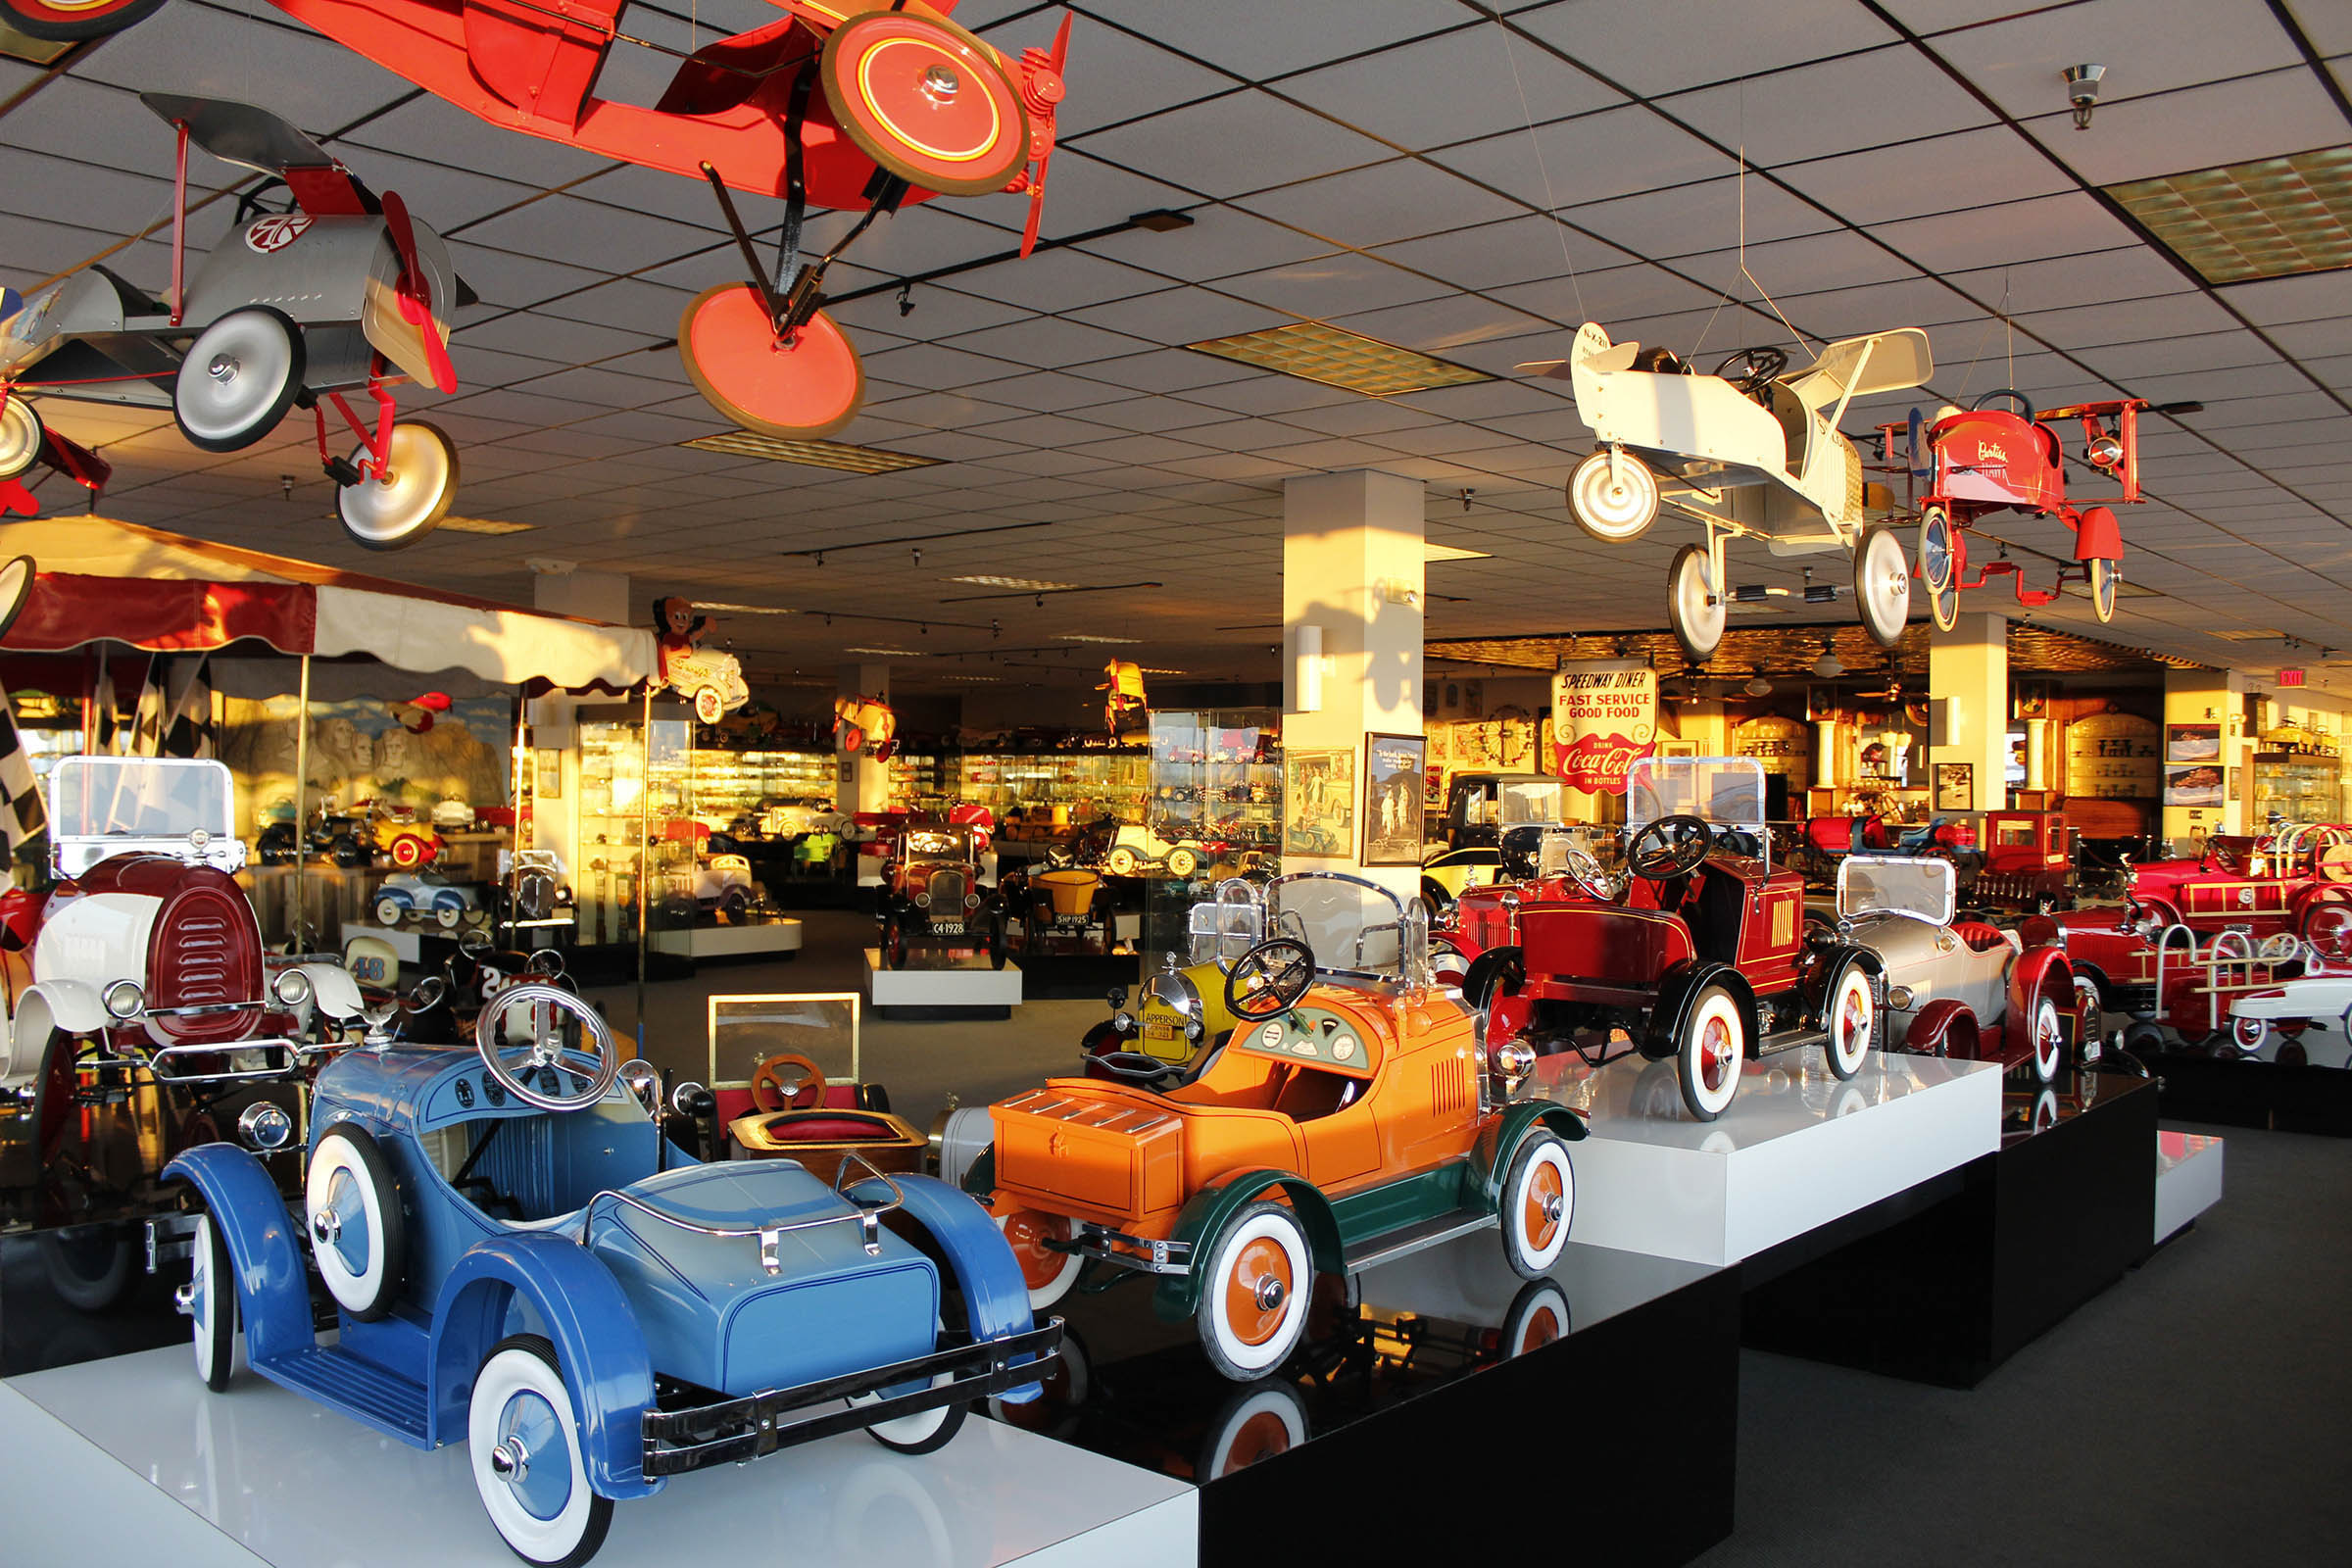 3rd Floor Pedal Cars, Museum of American Speed